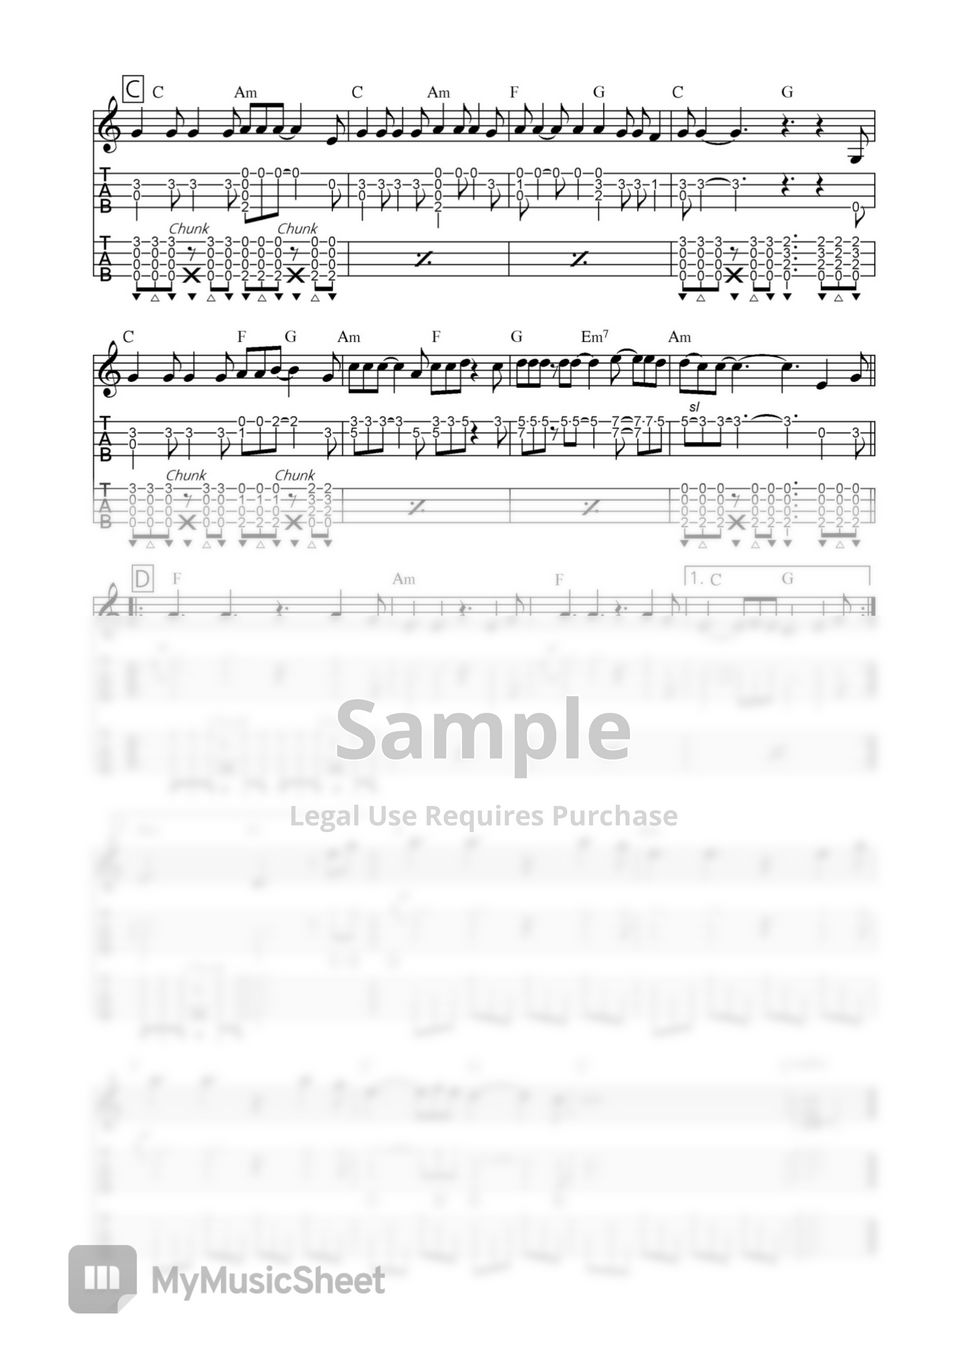 leonard cohen - Hallelujah (합주곡) by 싱글벙글 우쿨렐레